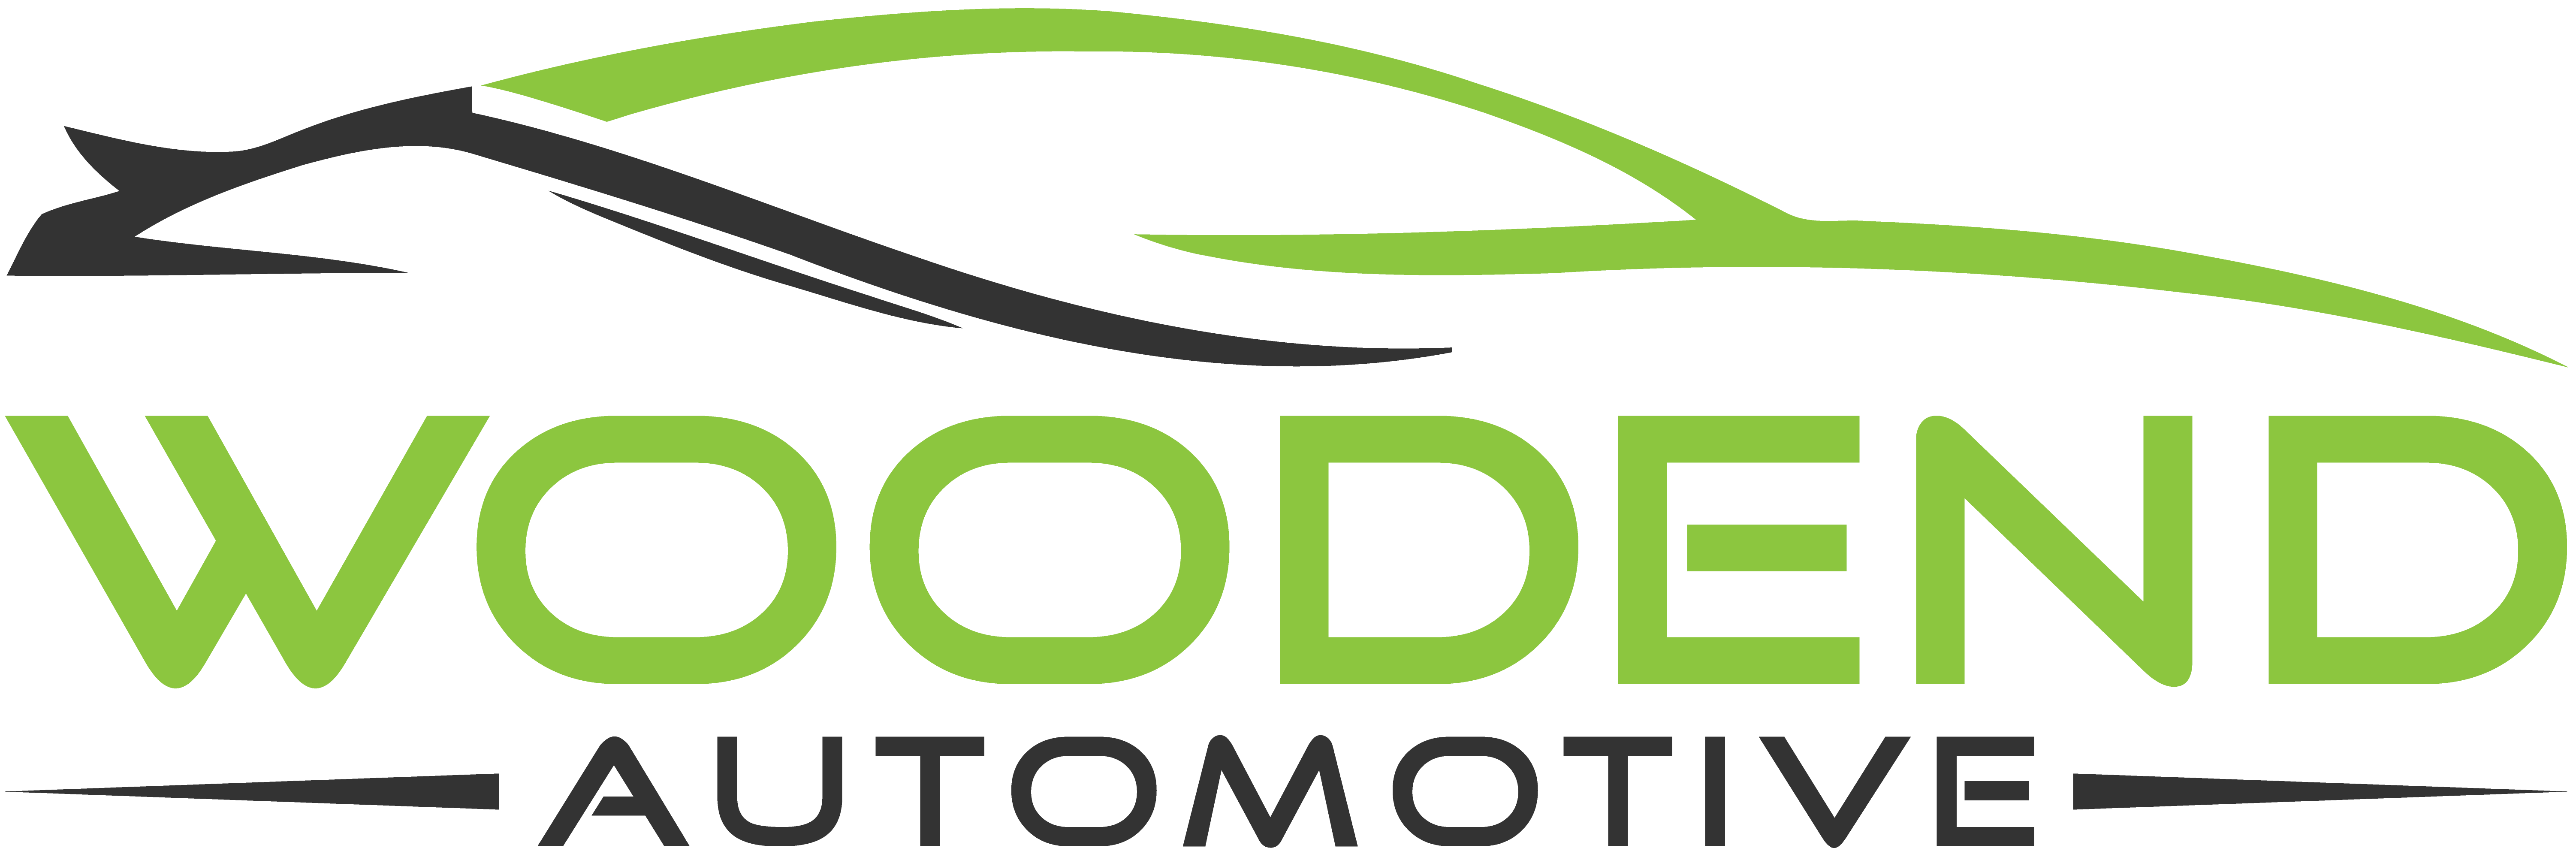 Woodend Automotive Ltd